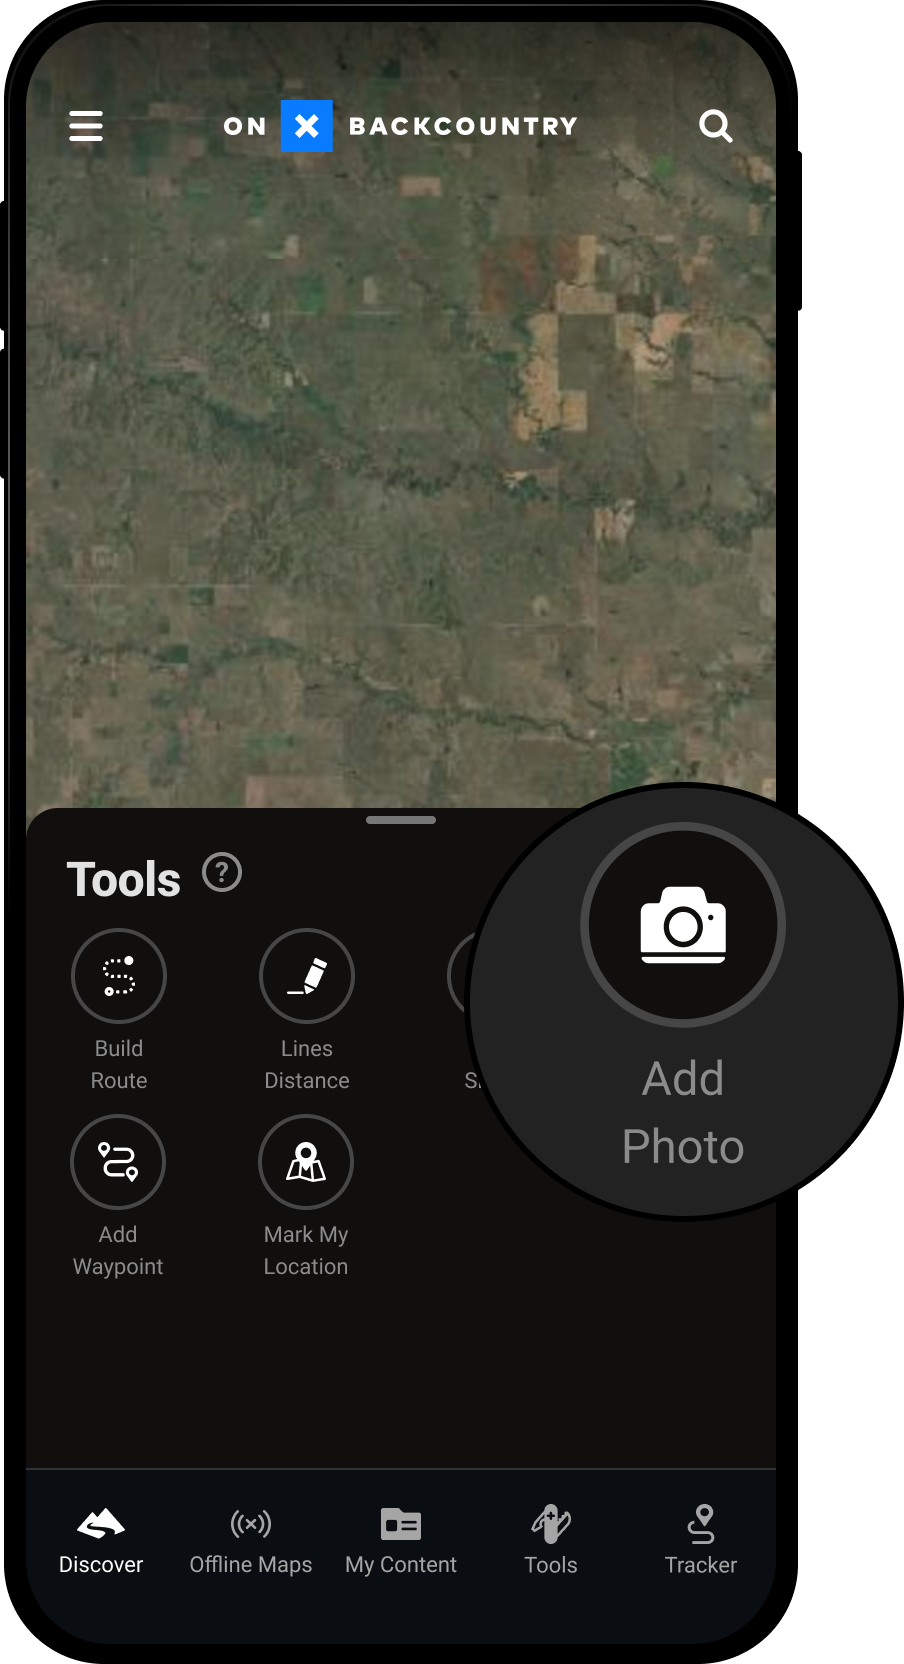 Add Photo Tools Menu Backcountry App.png